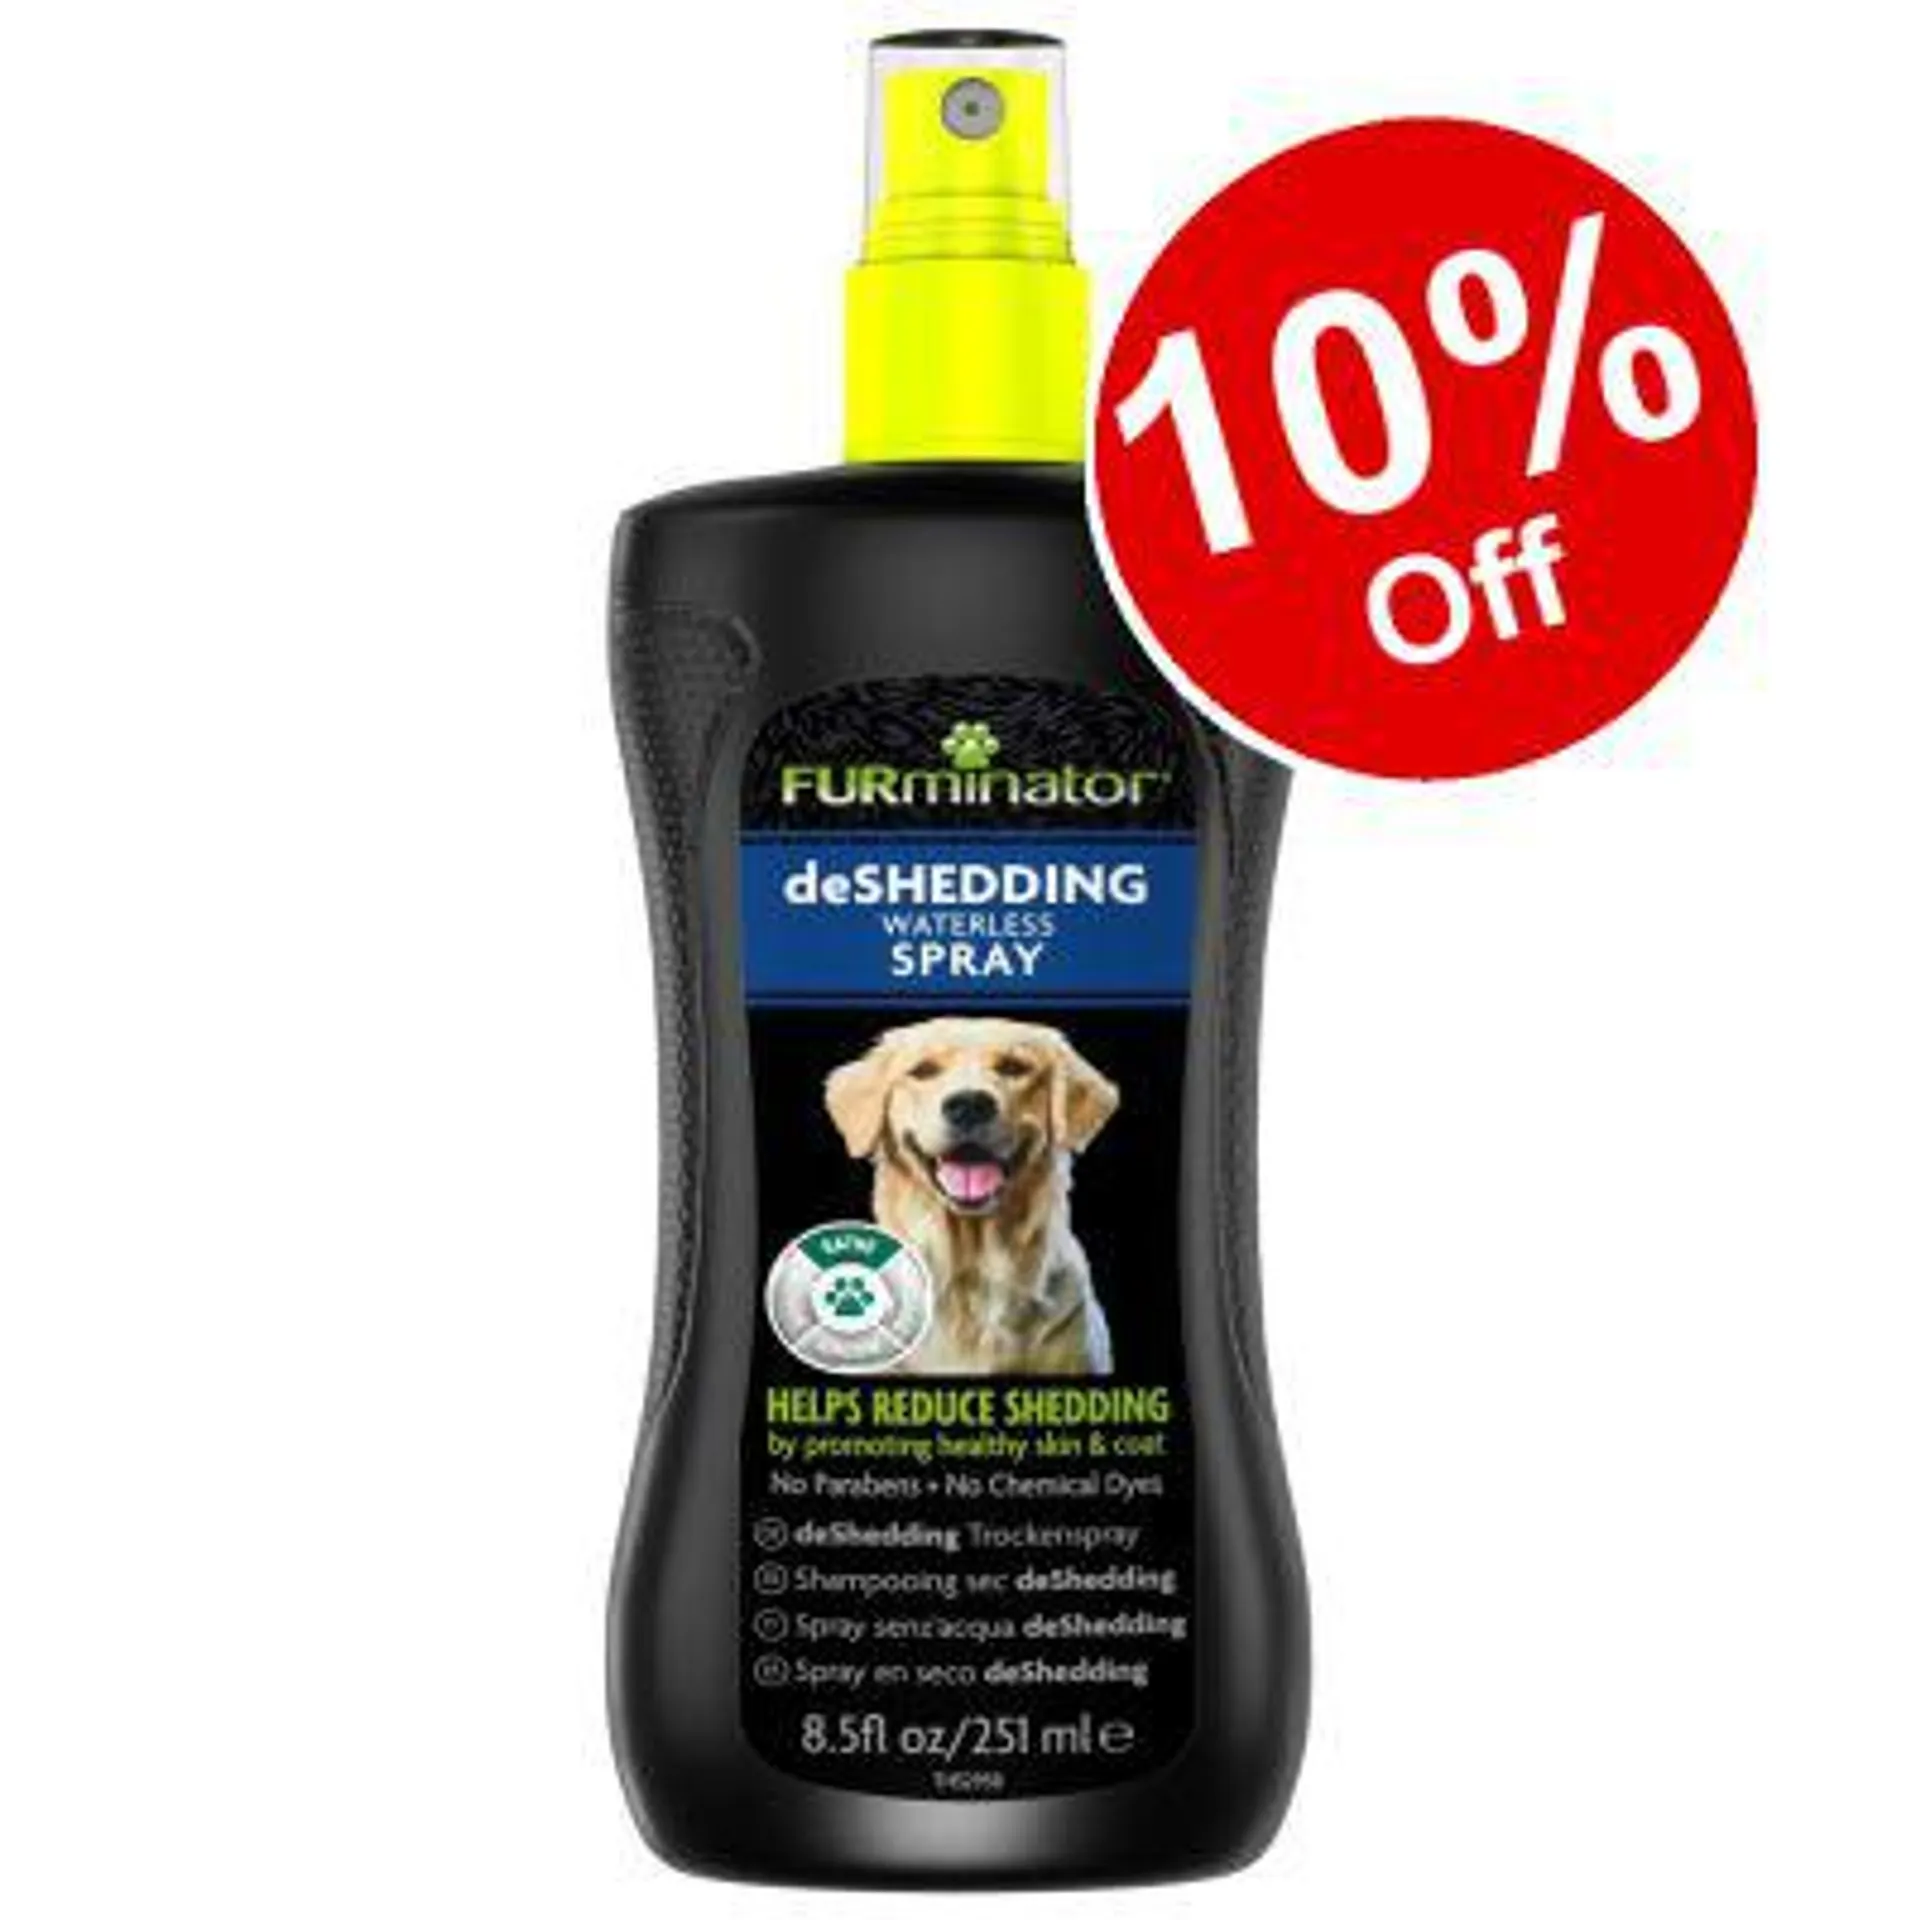 FURminator Dog deShedding Waterless Spray - 10% Off!*